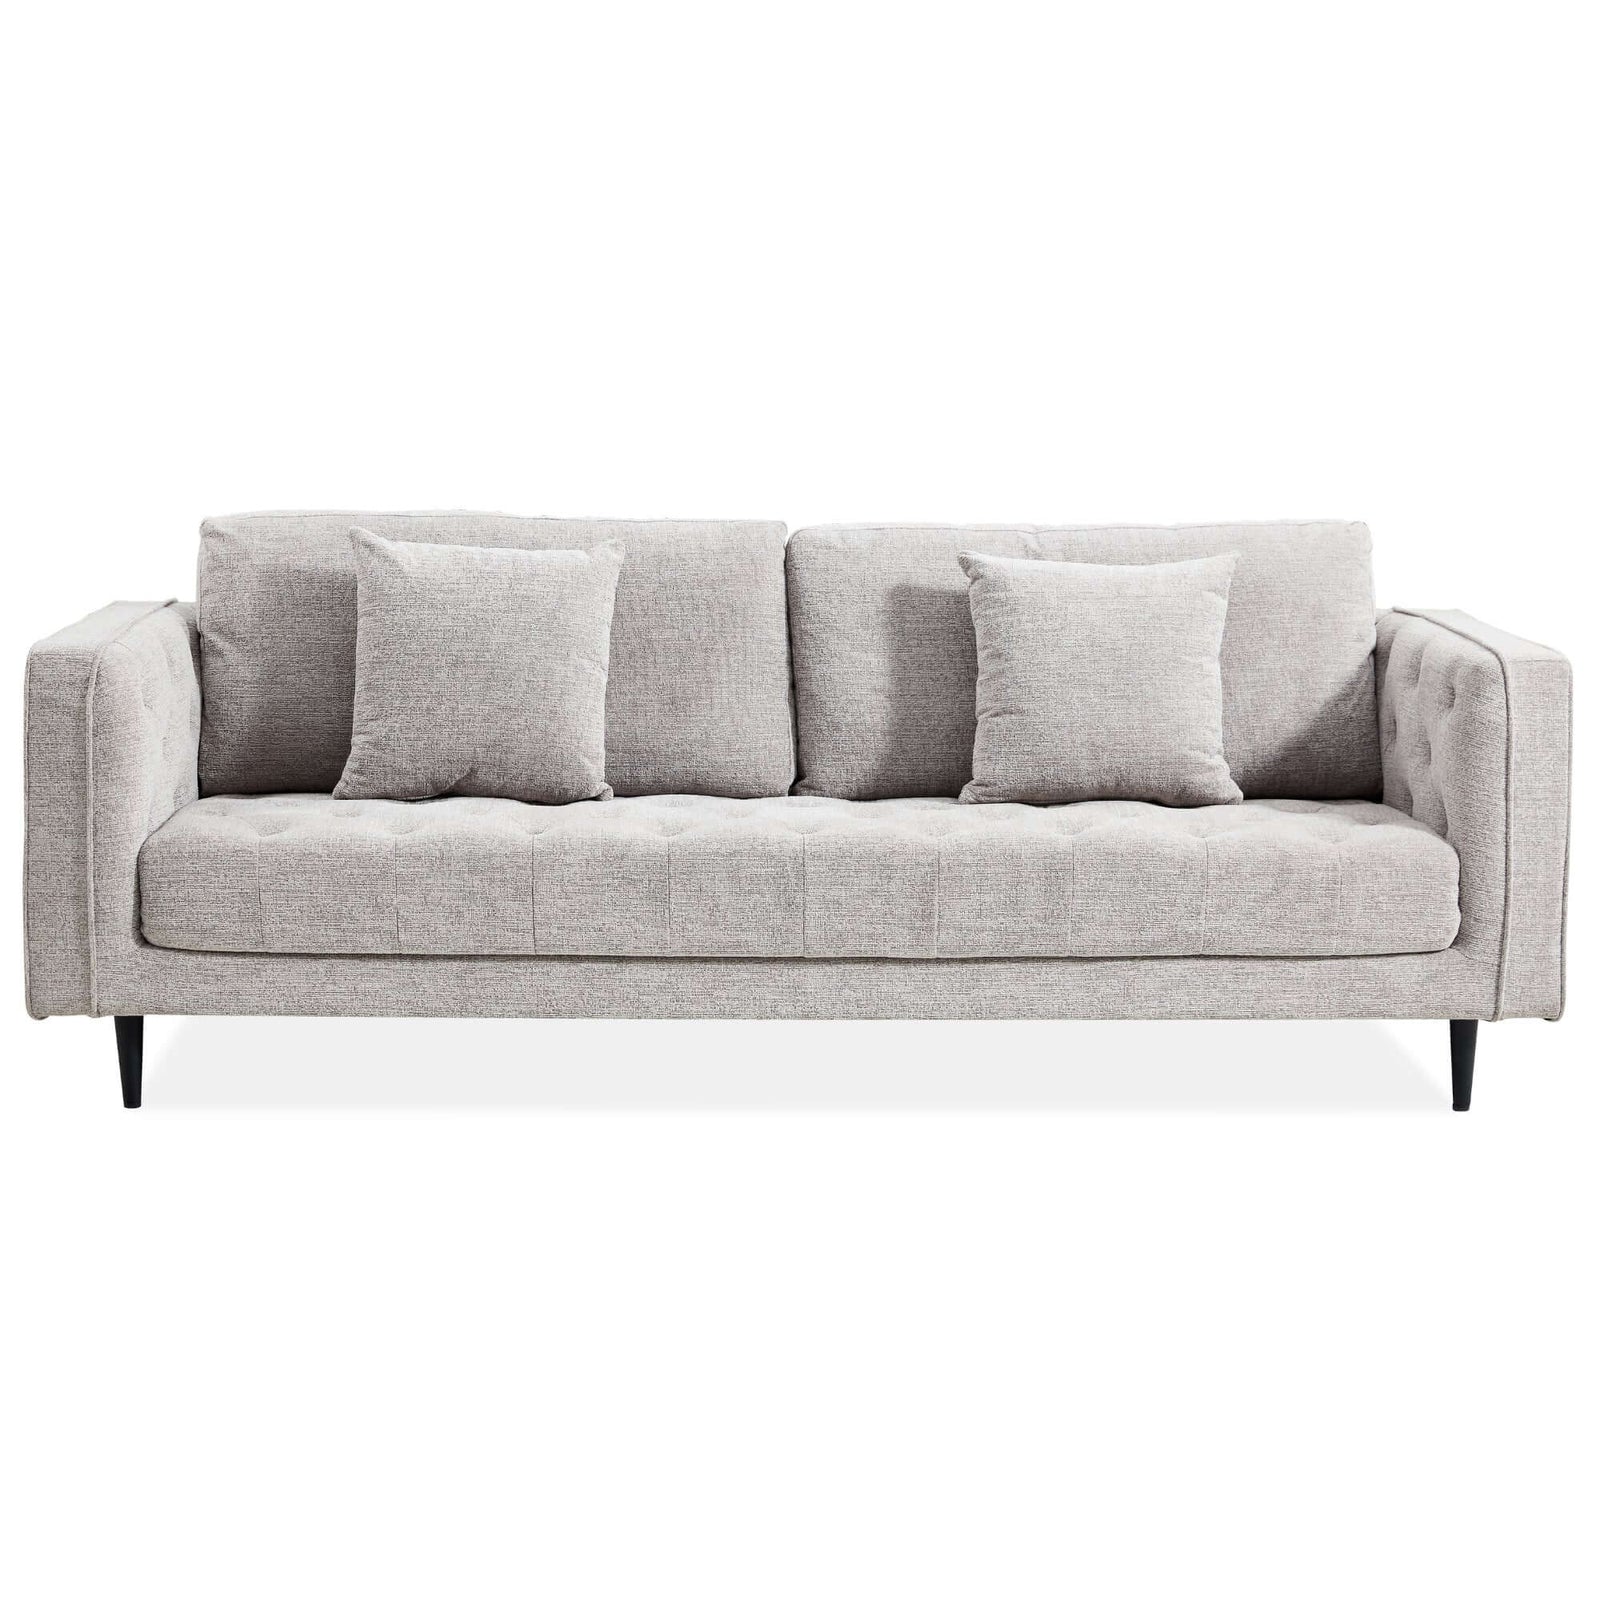 Jolie XL Size 3 Seater Sofa Fabric Uplholstered Lounge Couch - Quartz-Upinteriors